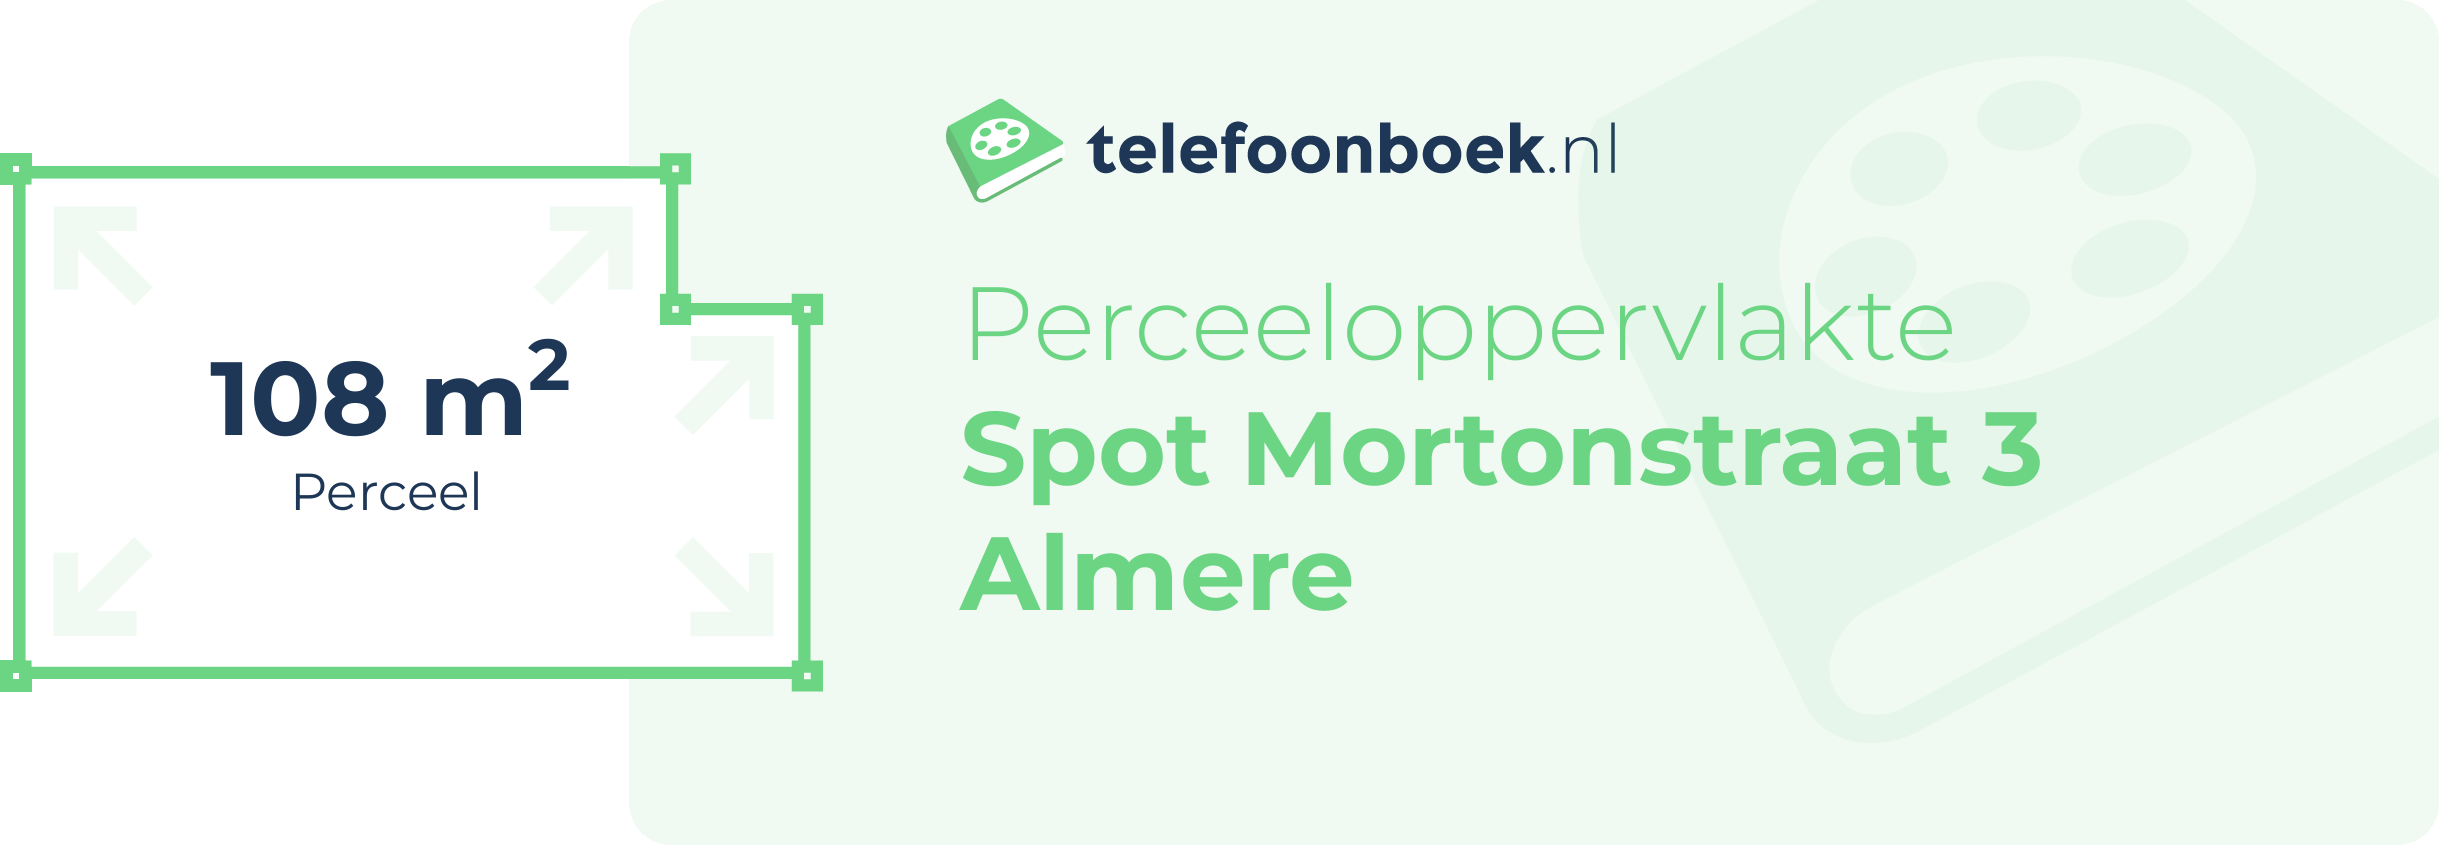 Perceeloppervlakte Spot Mortonstraat 3 Almere